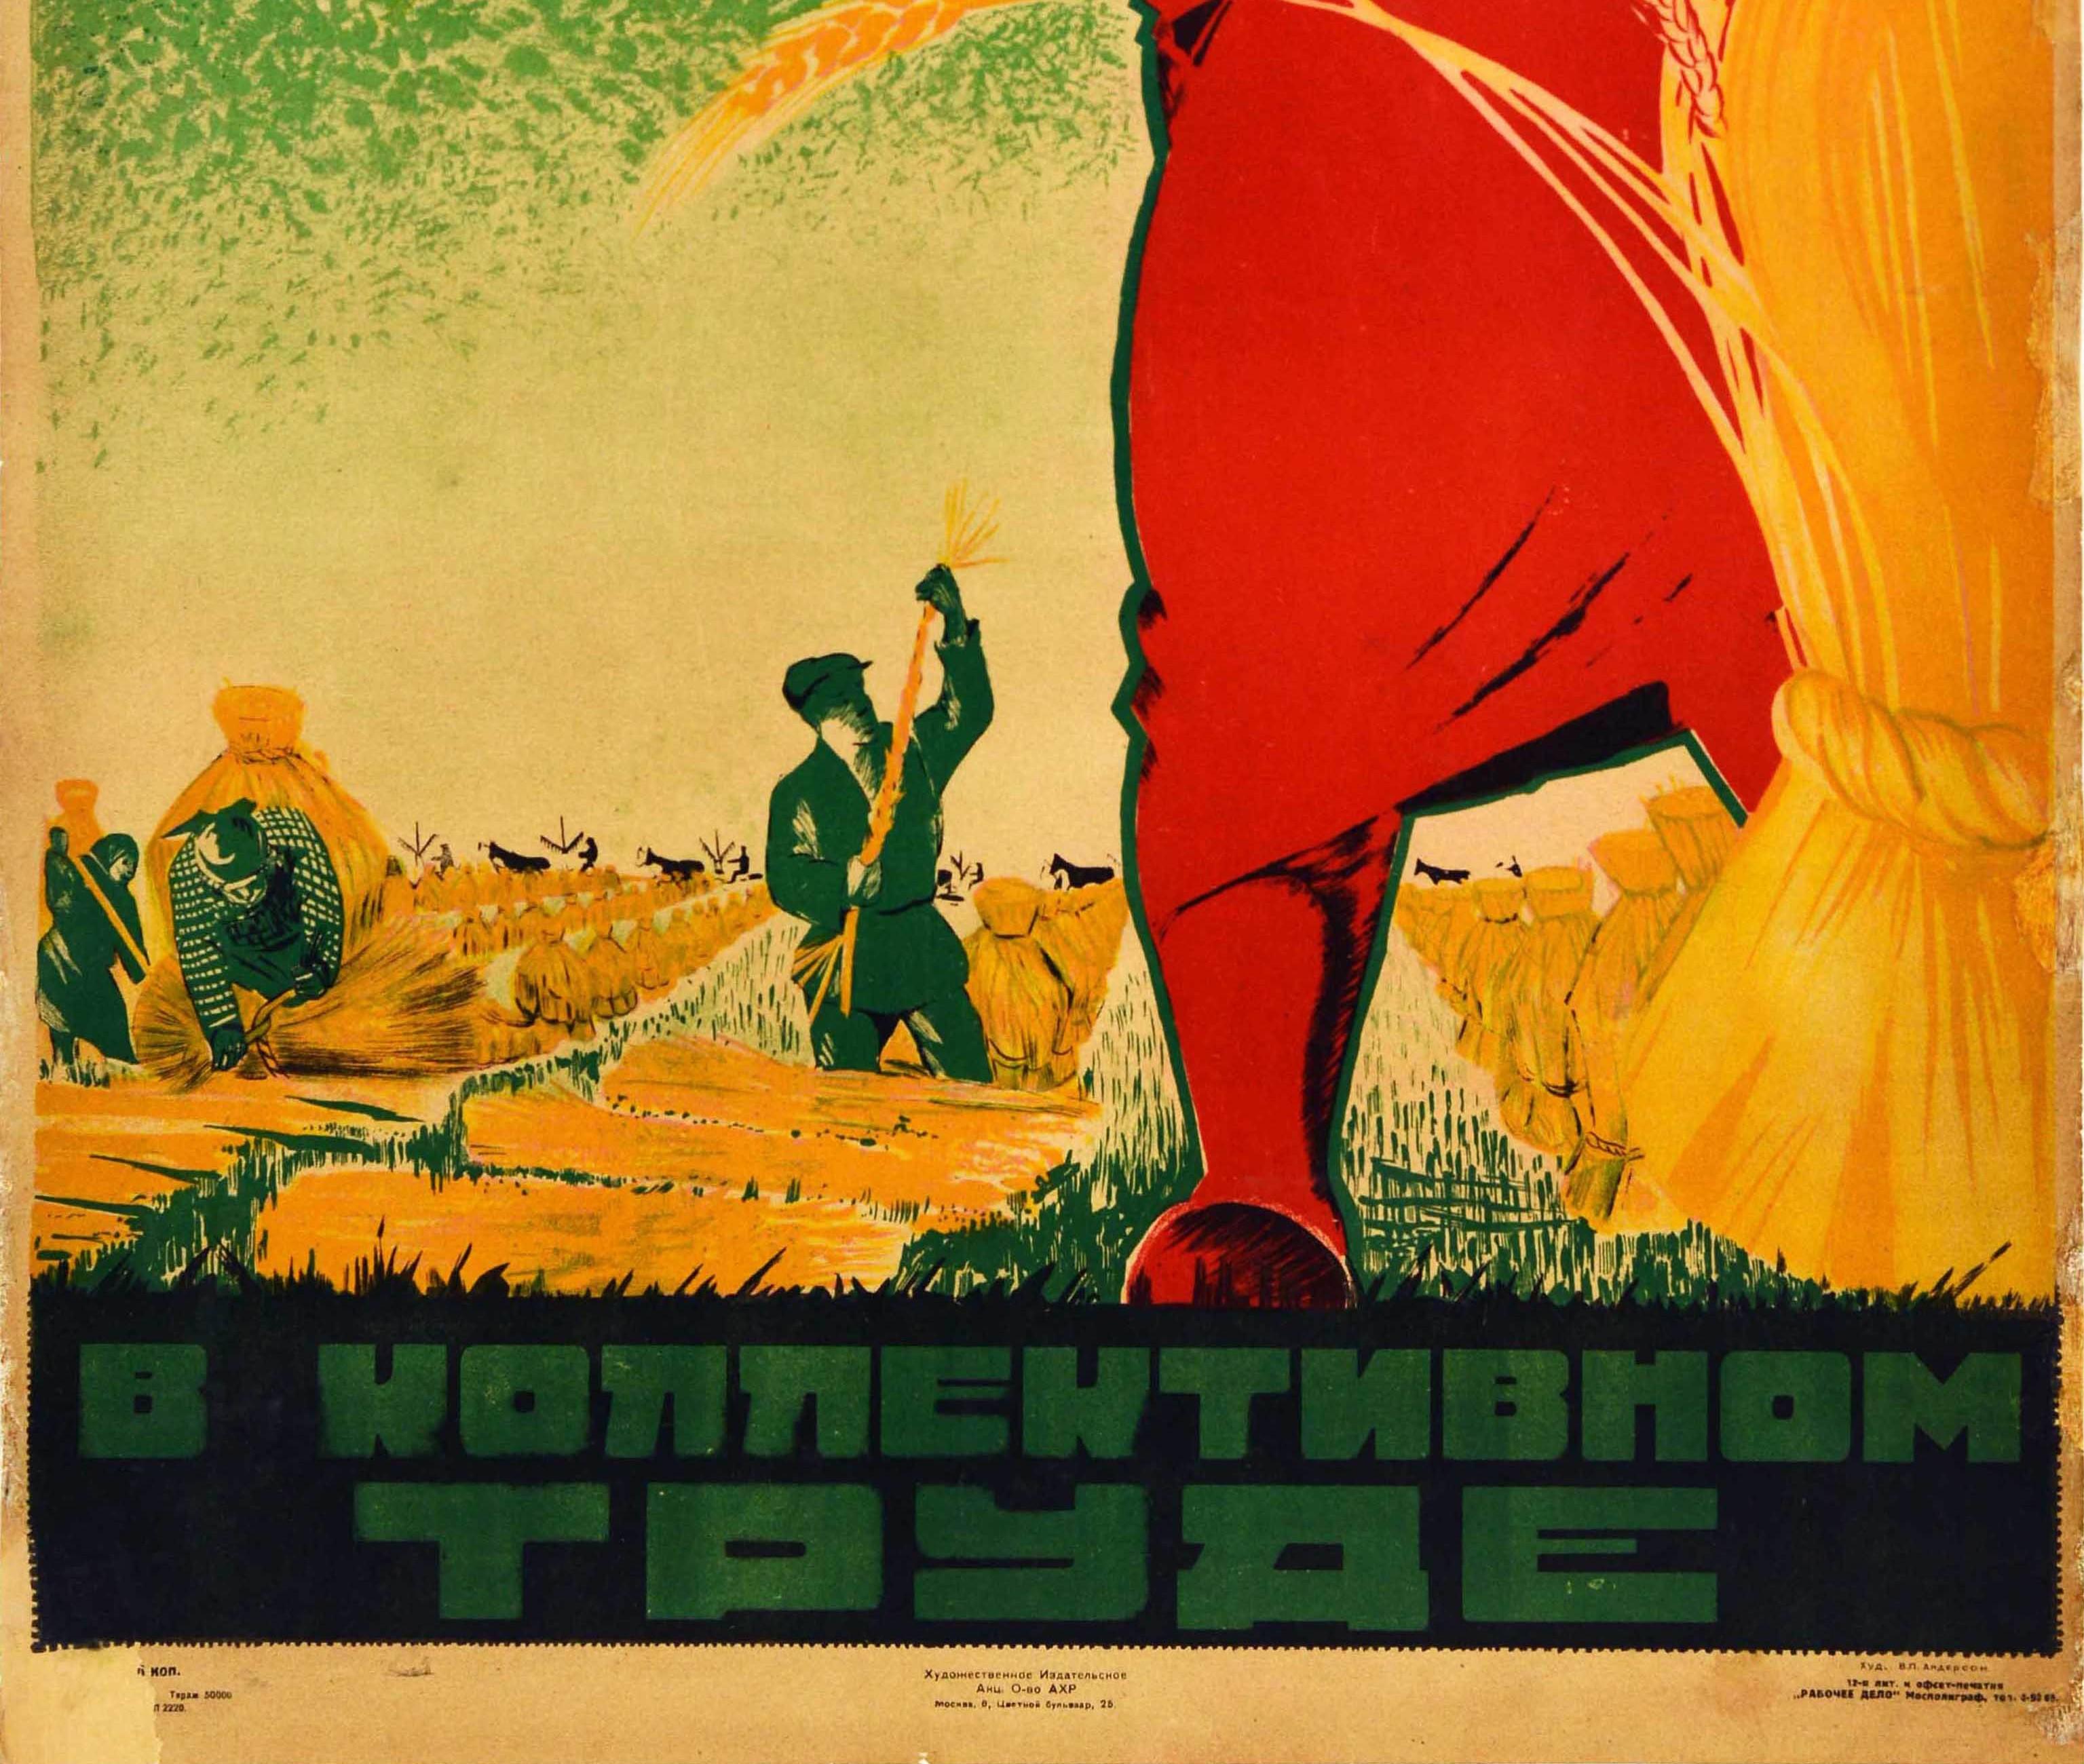 stalin propaganda poster